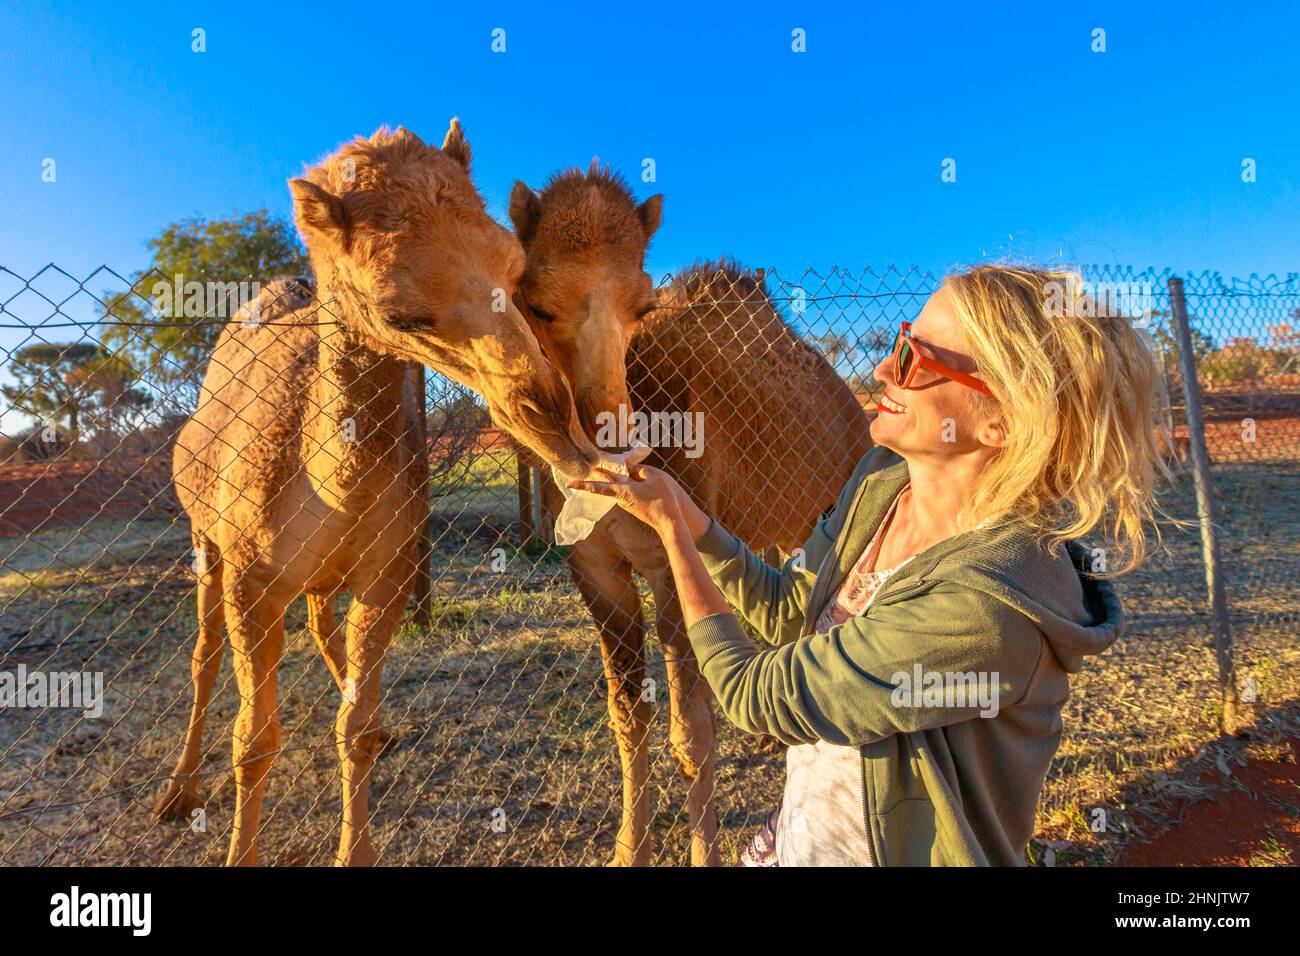 girl feeding Australian dromedary, Camelus dromedarius species. Endemic to Australia. Caucasian blonde tourist enjoys camel encounter in the Northern Stock Photo